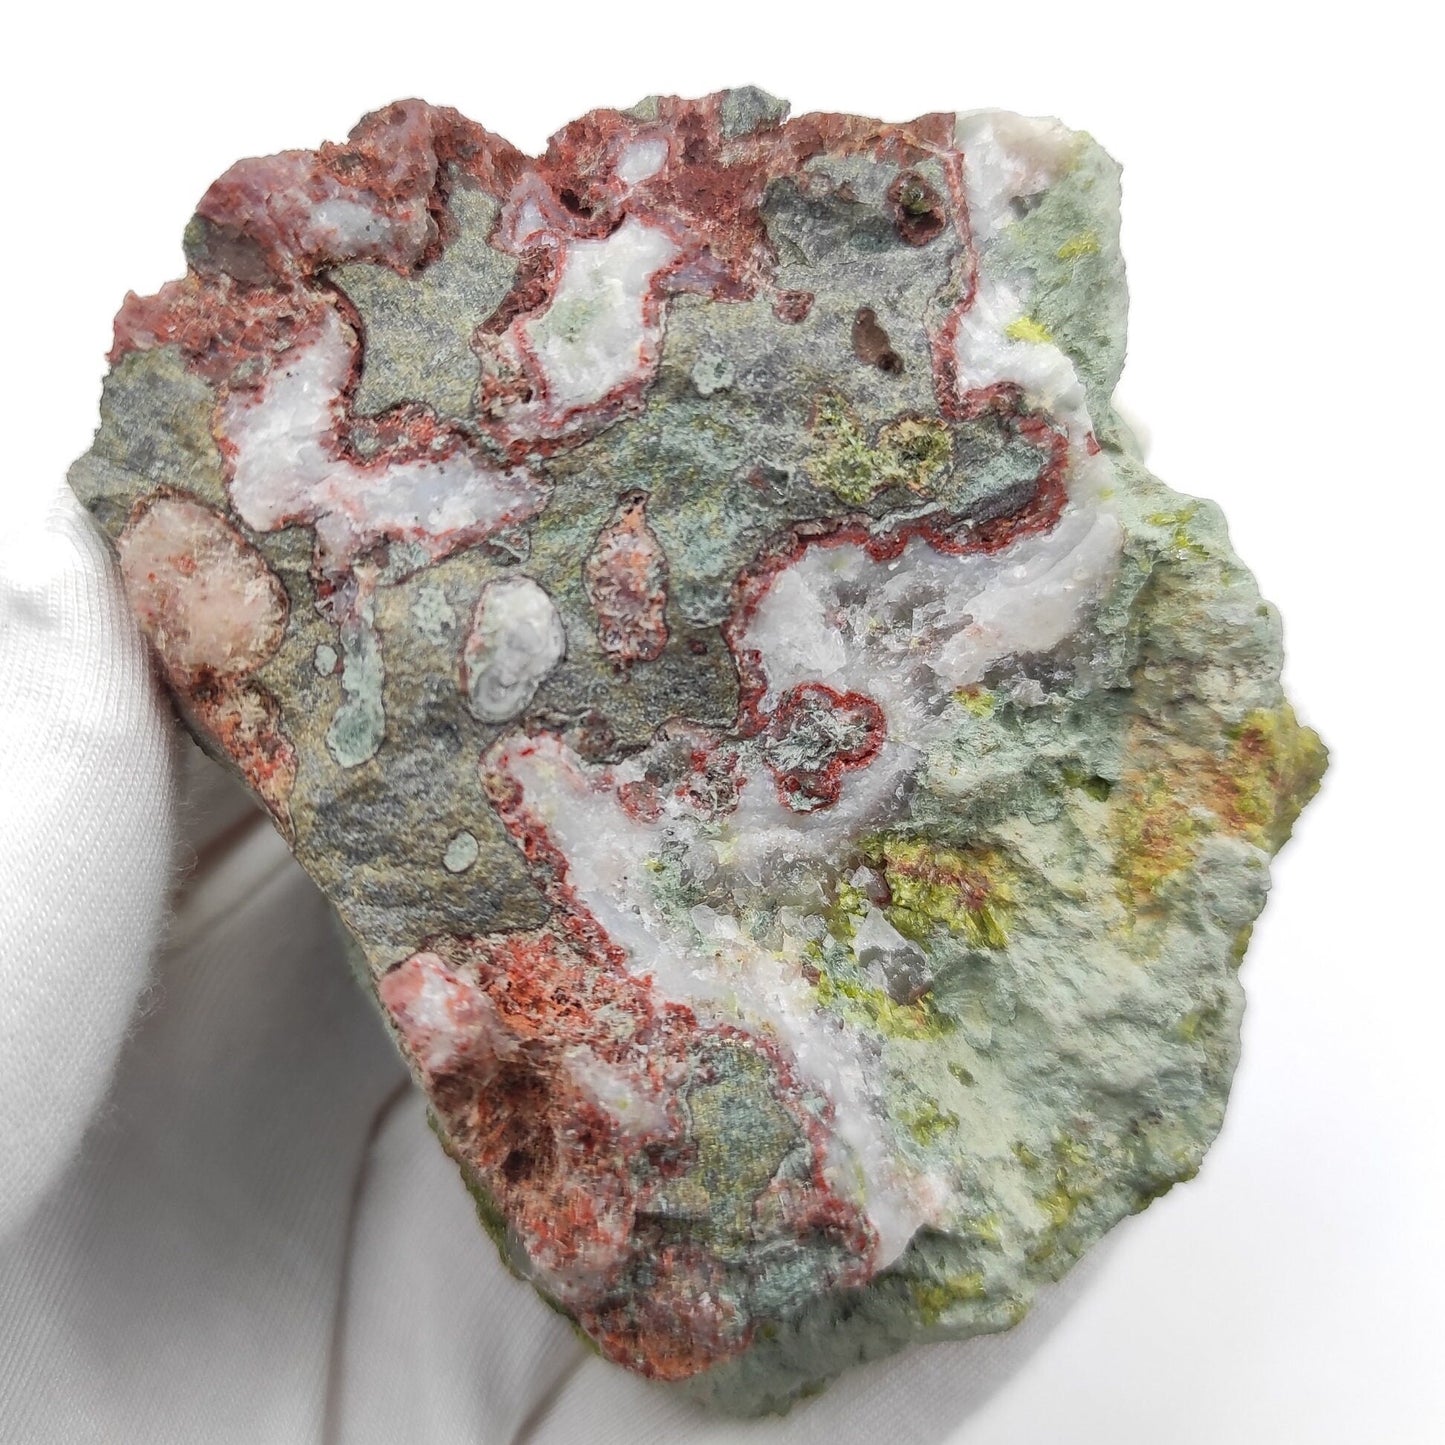 148g Green Epidote on Matrix - Imilchil, Morocco - Green Epidote Crystal Cluster - Raw Mineral Specimen - Green Epidote and Quartz Crystal